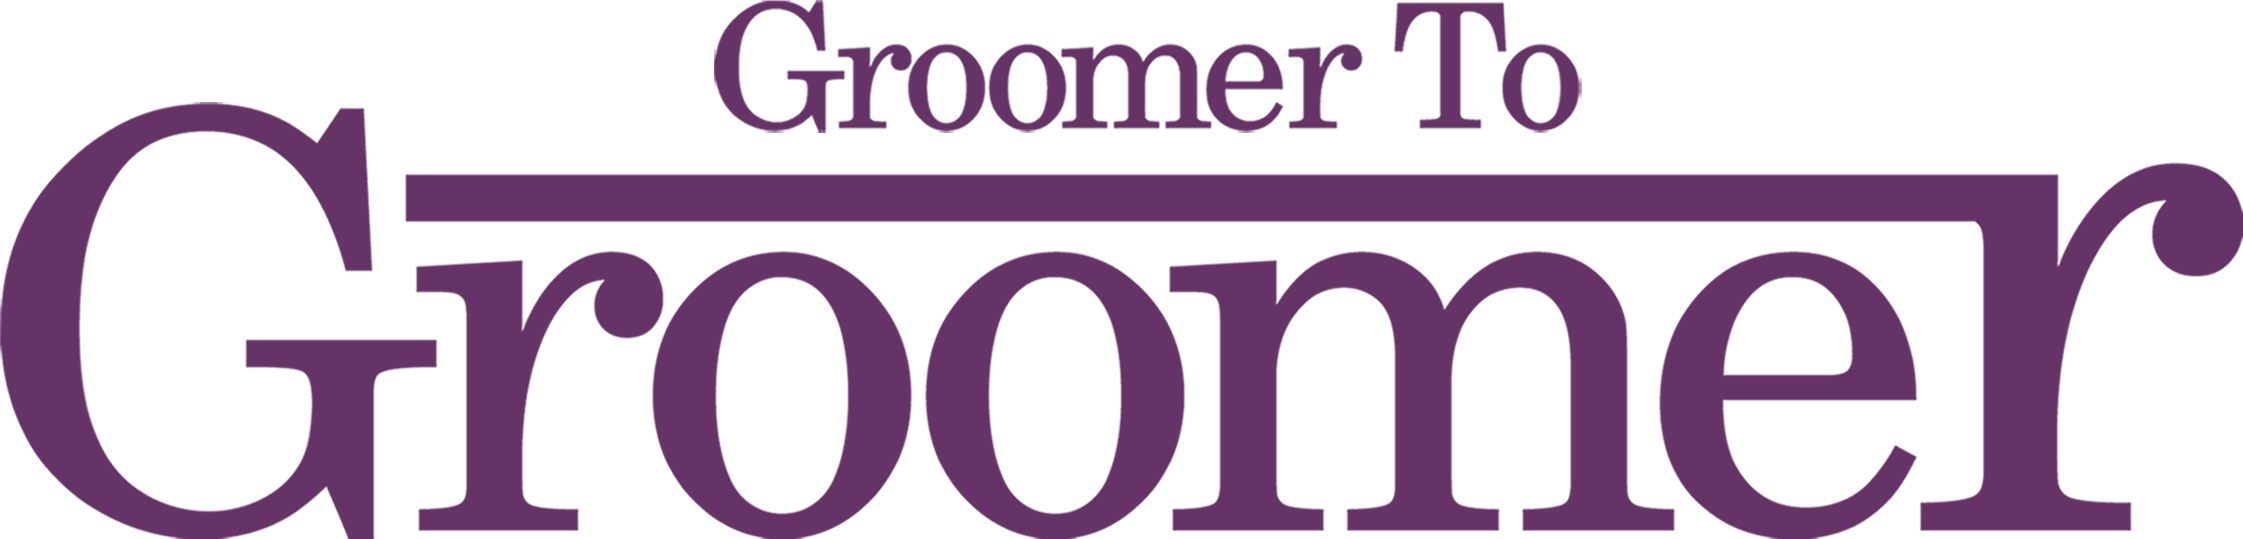 Groomer to Groomer logo purple